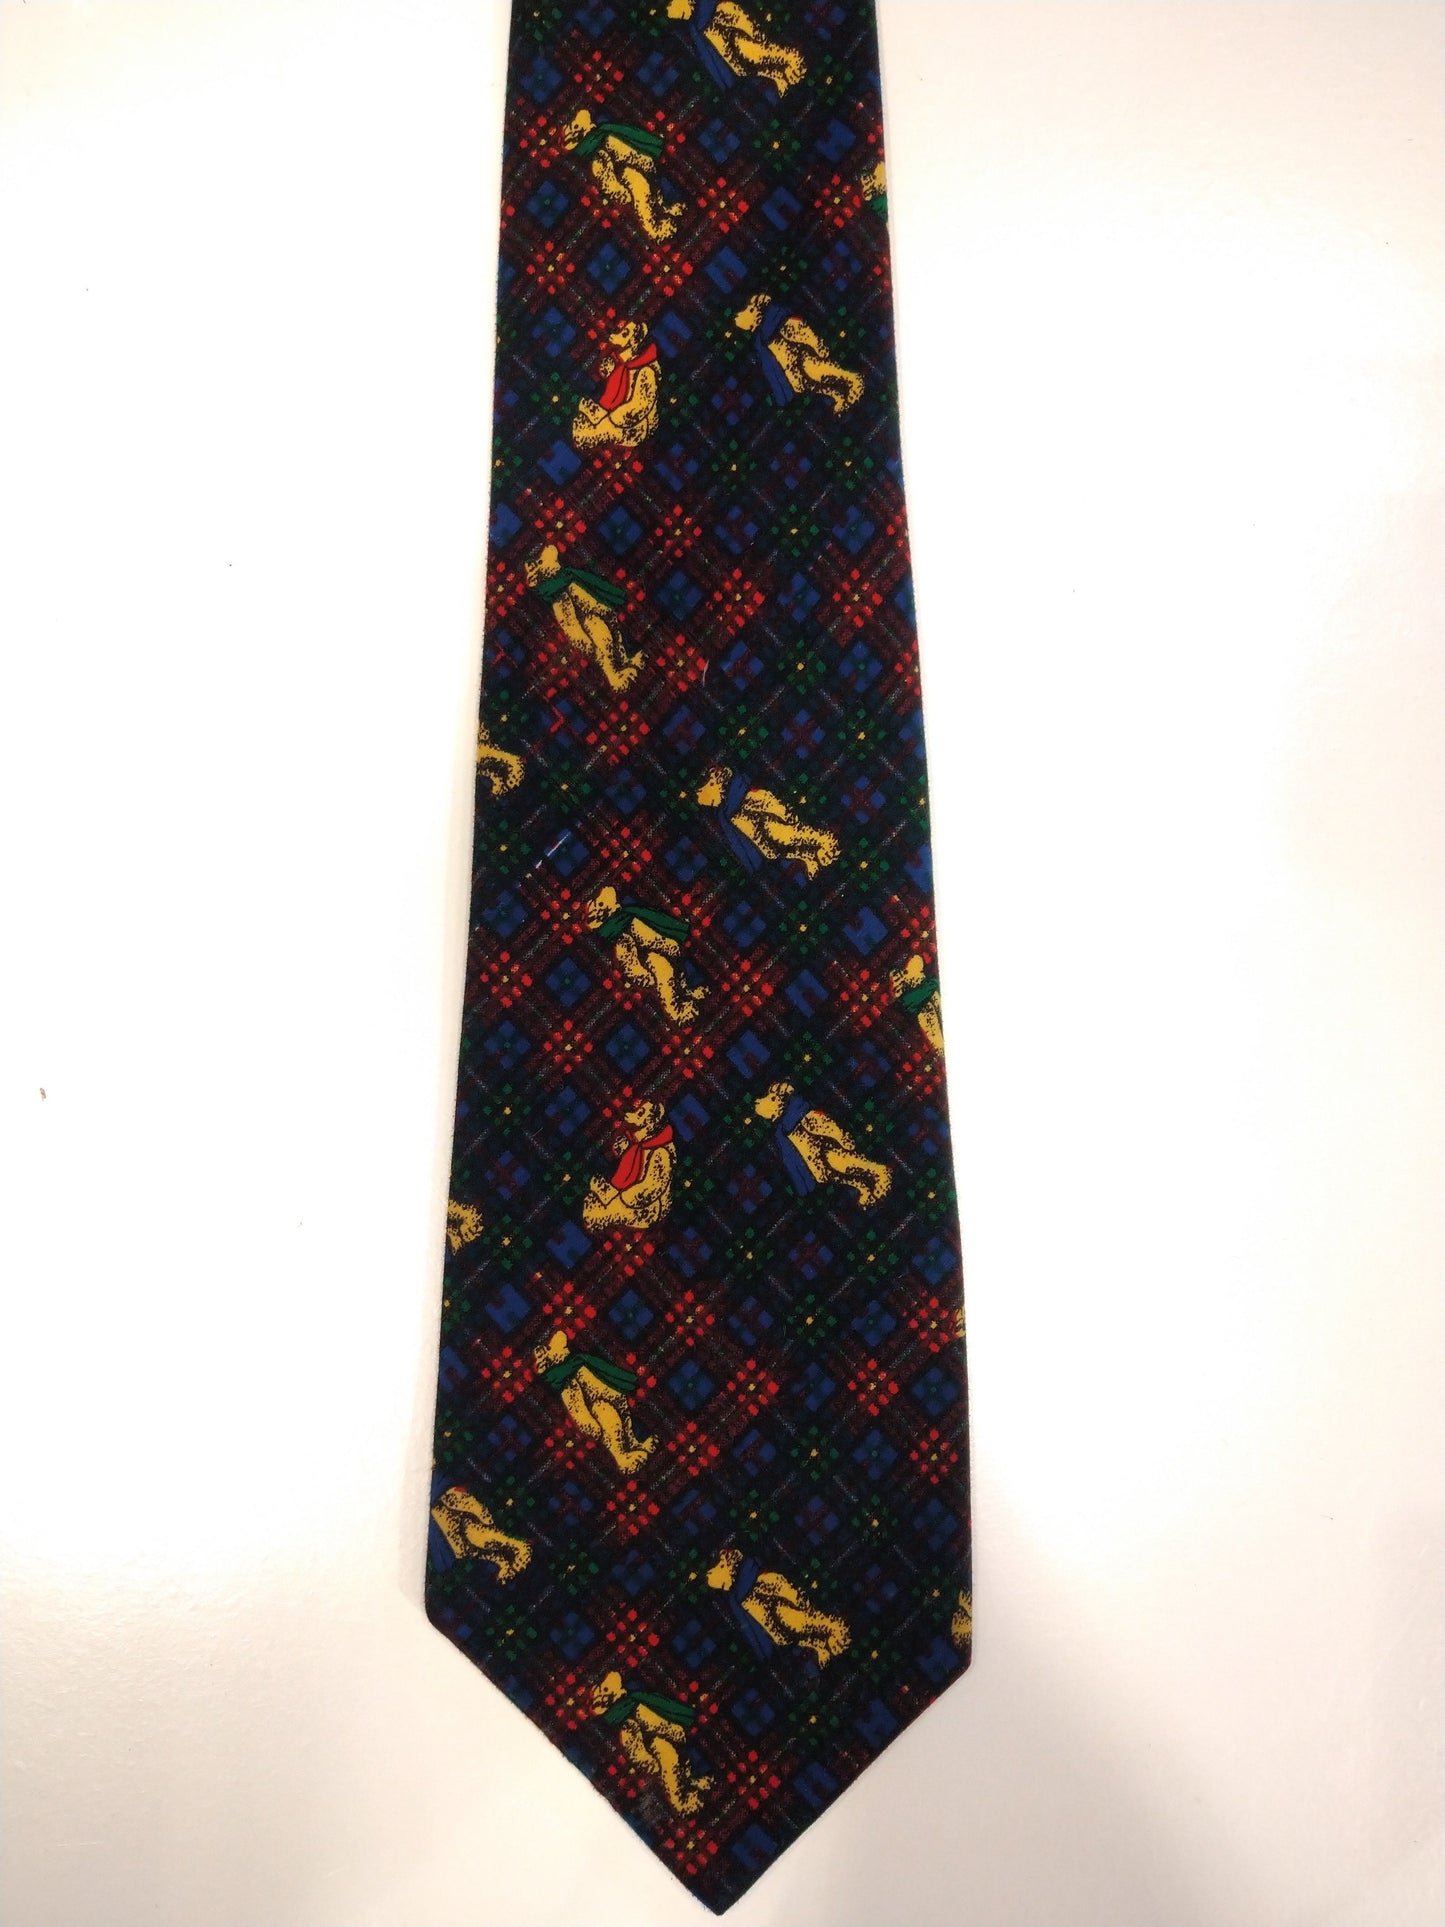 La corbata de poliéster vintage. Hermoso motivo de oso multicolor.